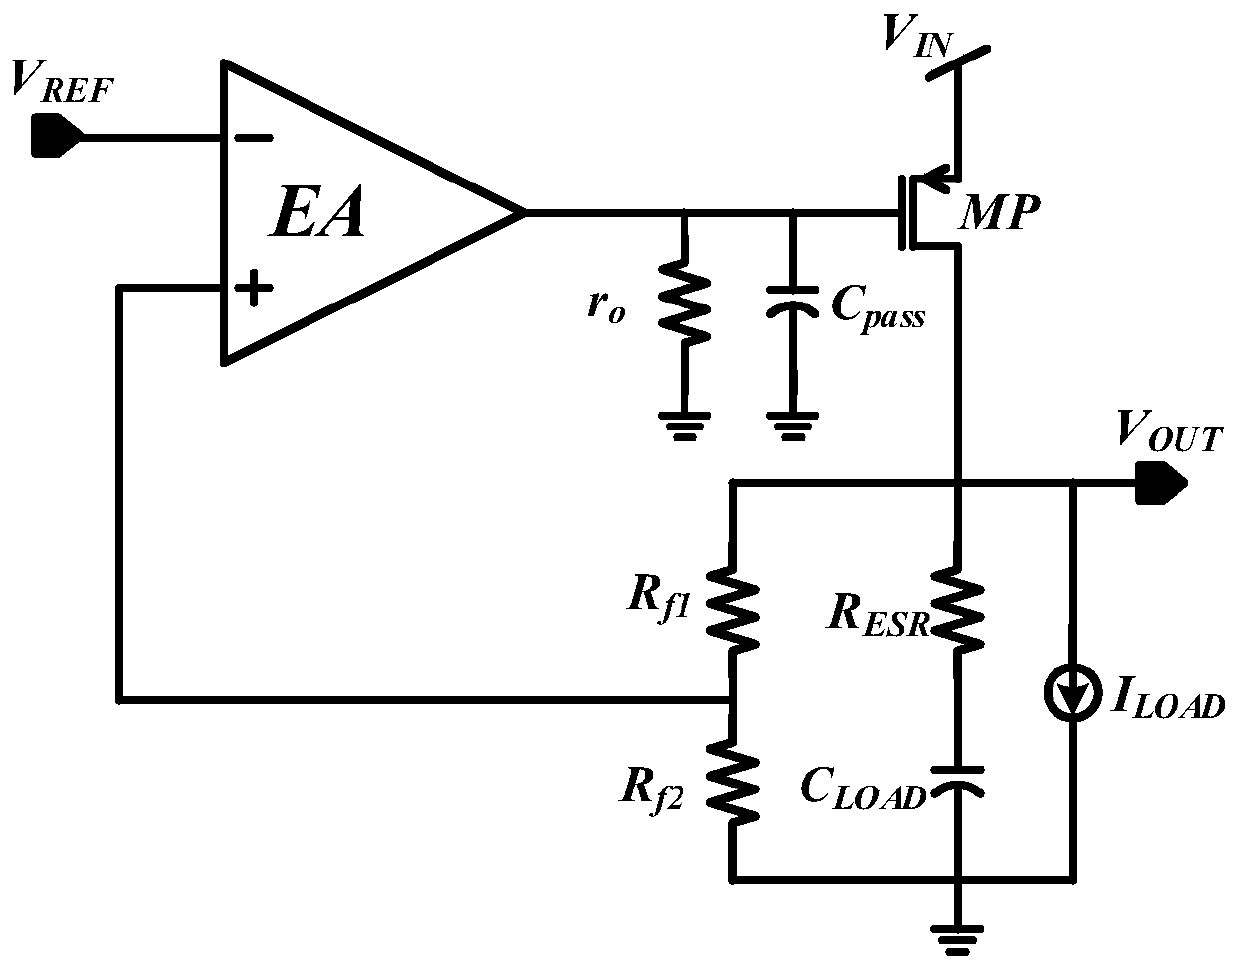 Low dropout linear voltage regulator with wide input voltage range